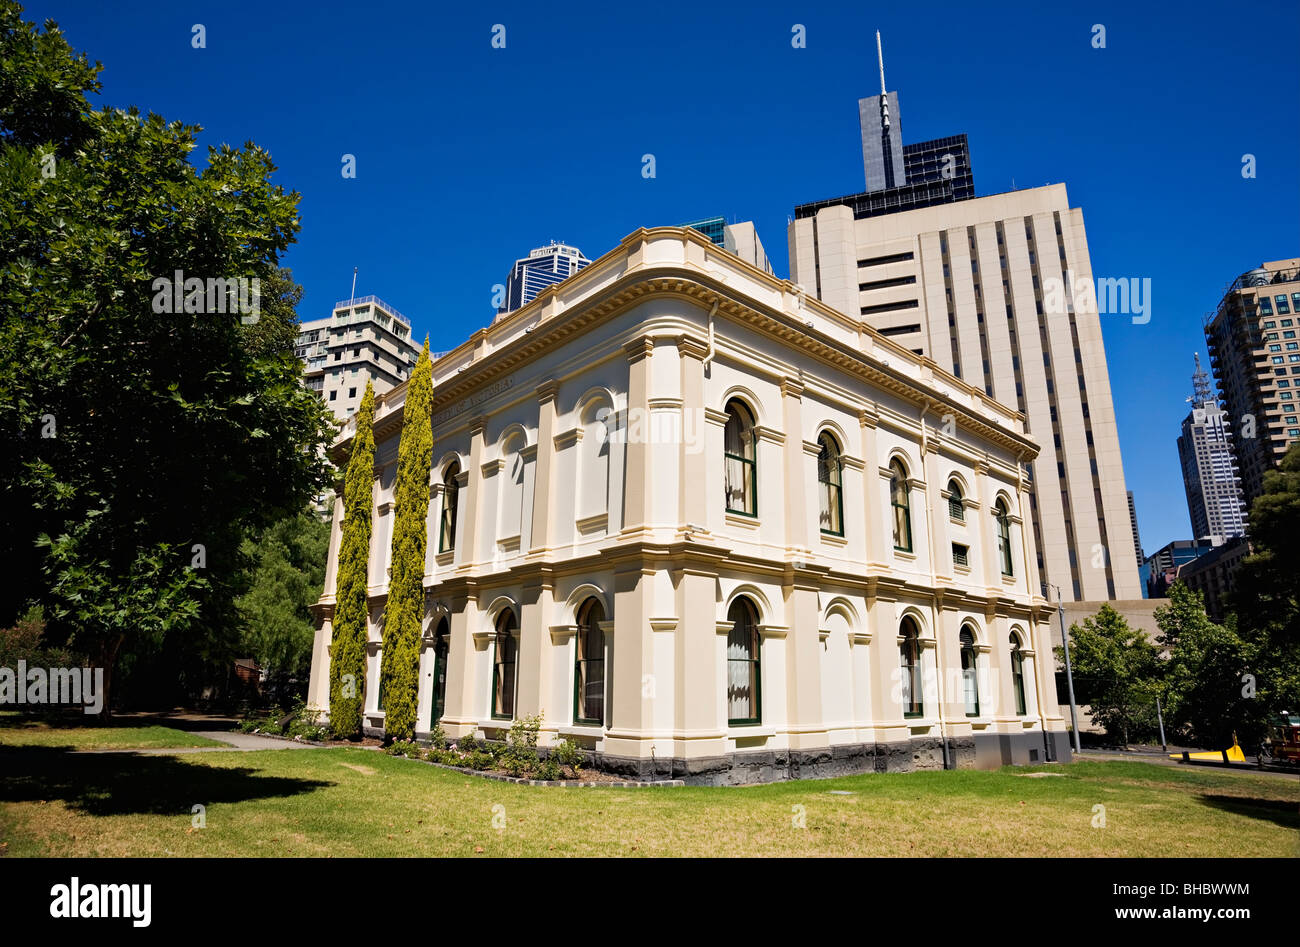 Melbourne-Architektur / The Royal Society of Victoria Gebäude ca. 1854 / Melbourne Victoria Australien. Stockfoto